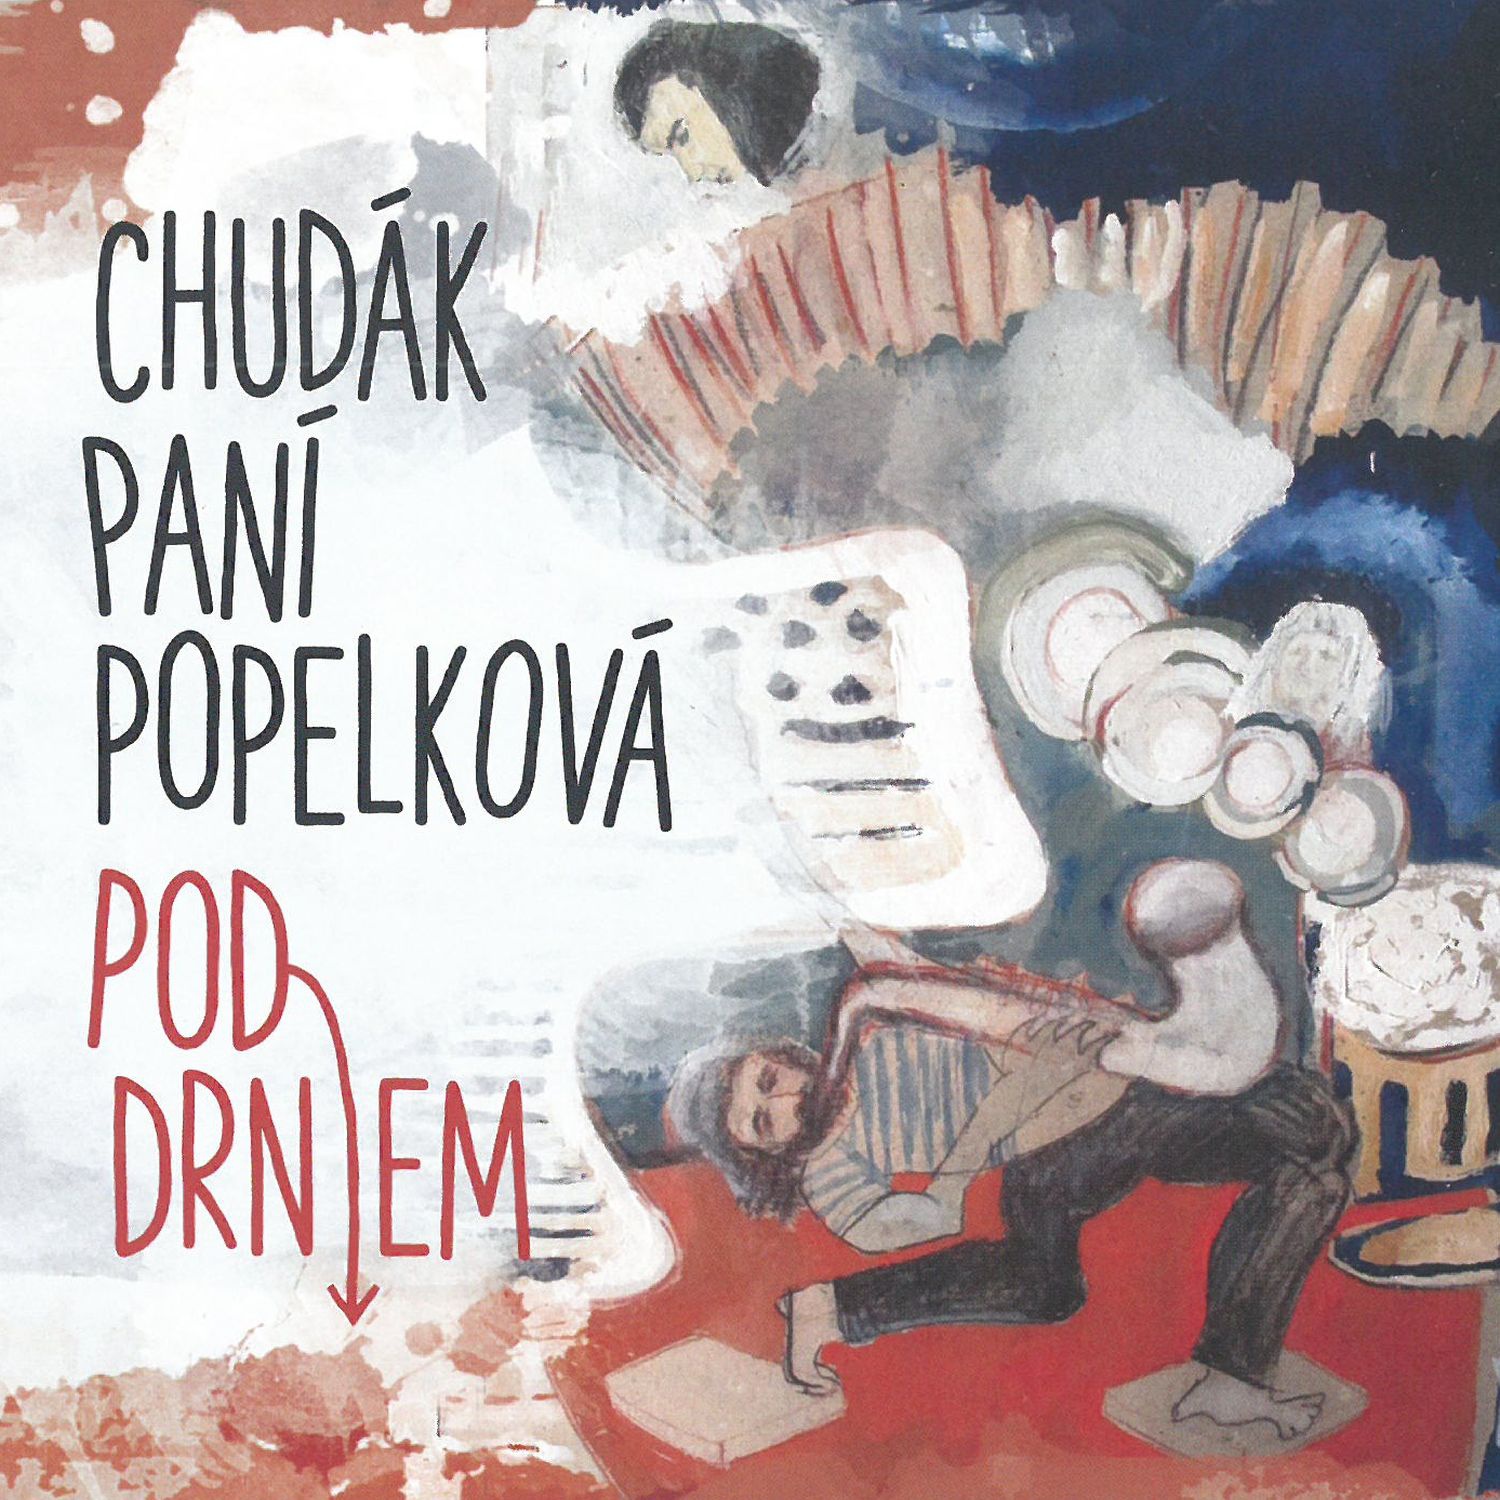 CD Shop - CHUDAK PANI POPELKOVA POD DRNEM